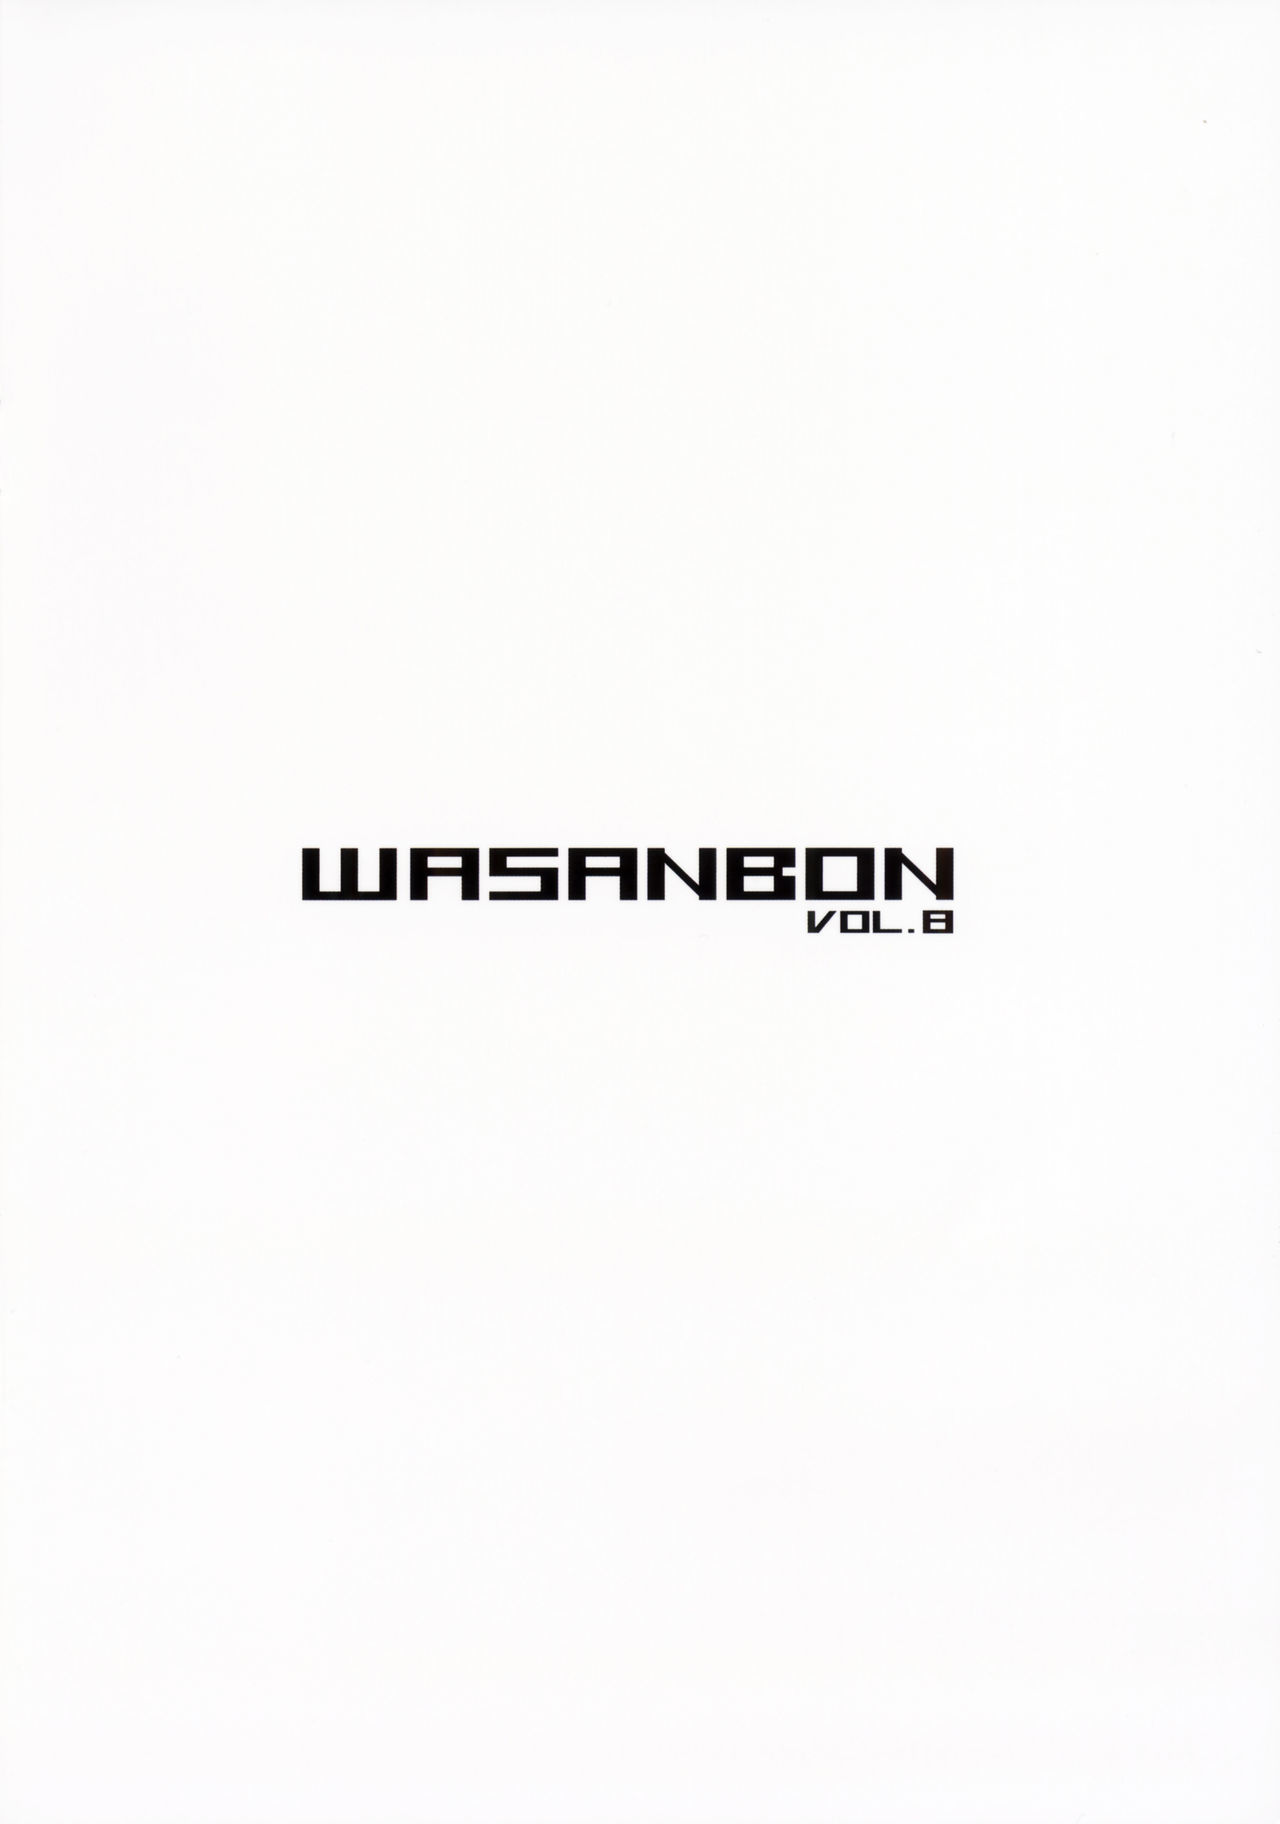 Wasabon vol.8